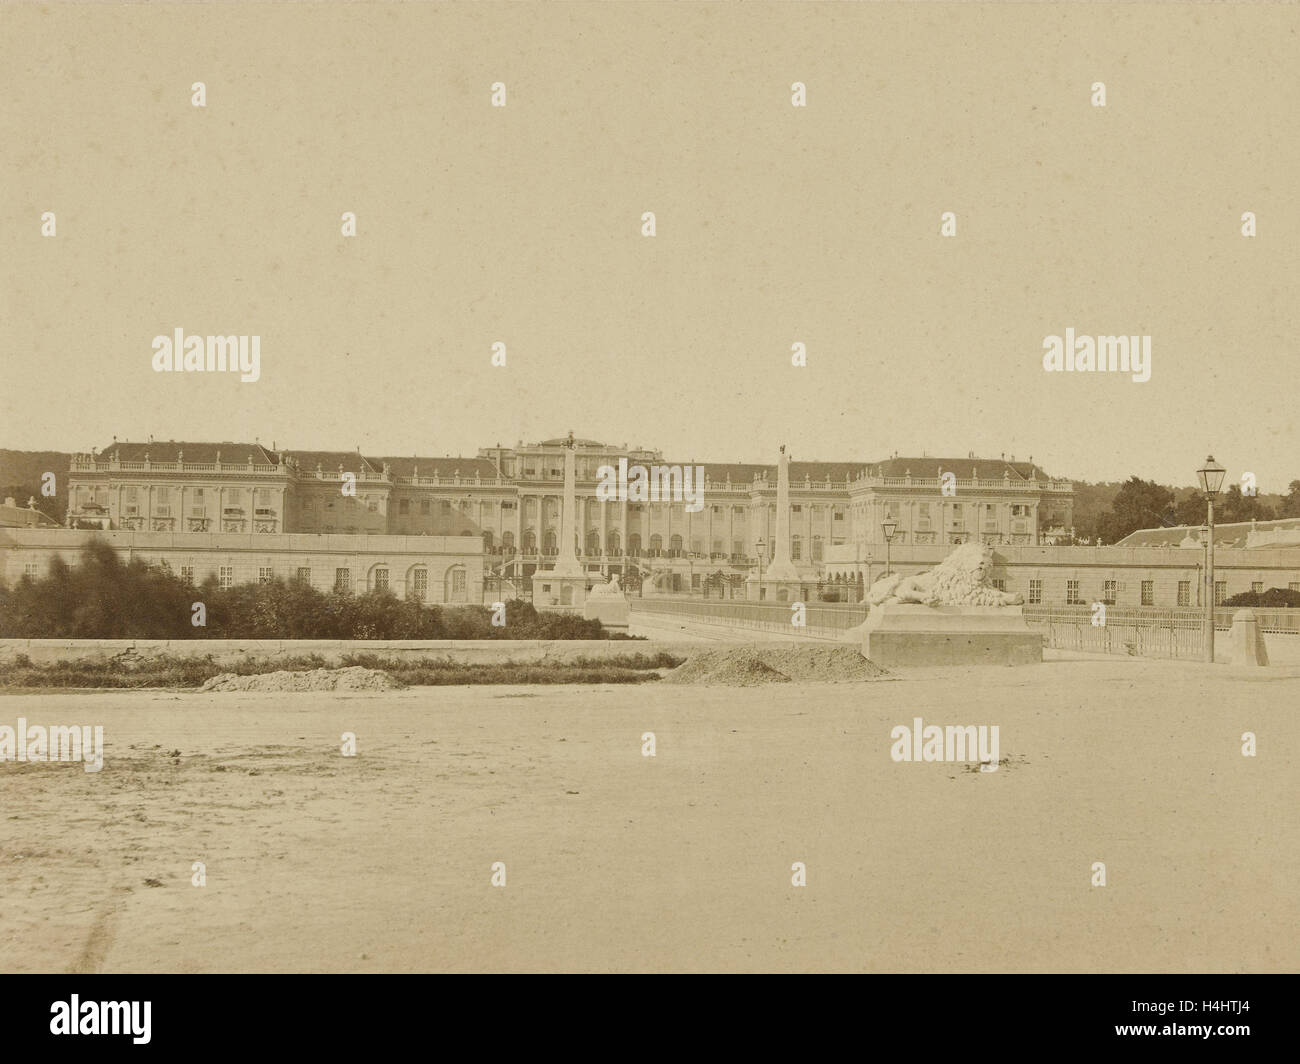 View of Schönbrunn Palace in Vienna Austria, Carl Haack, 1850 - 1900 Stock Photo